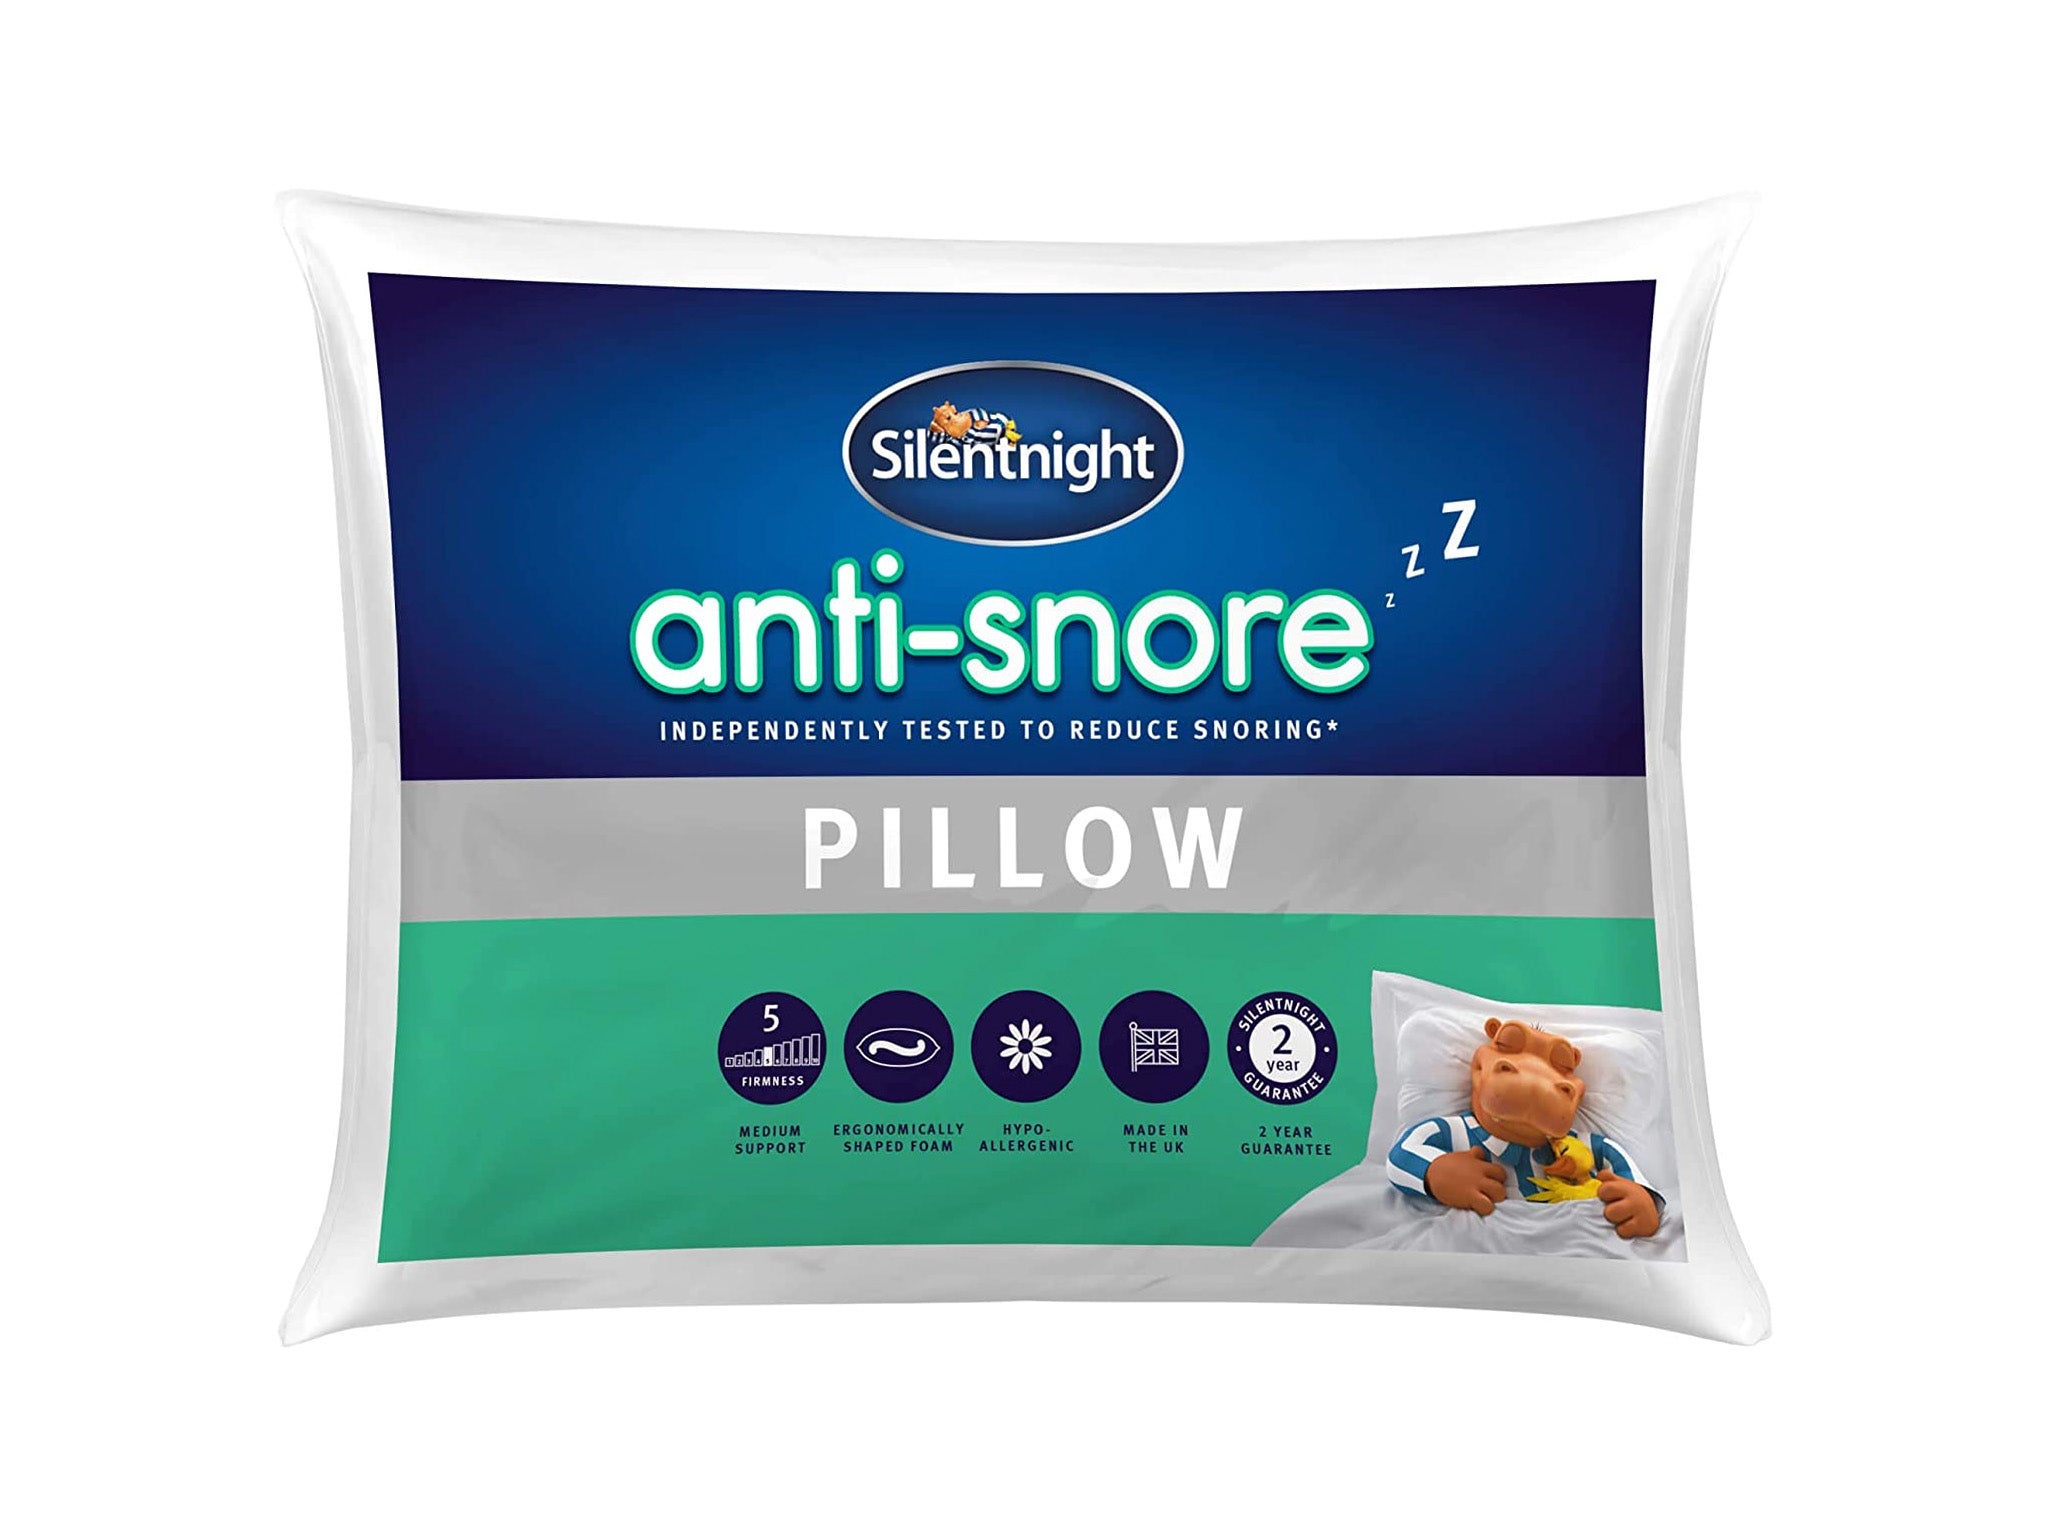 Silentnight anti-snore pillow